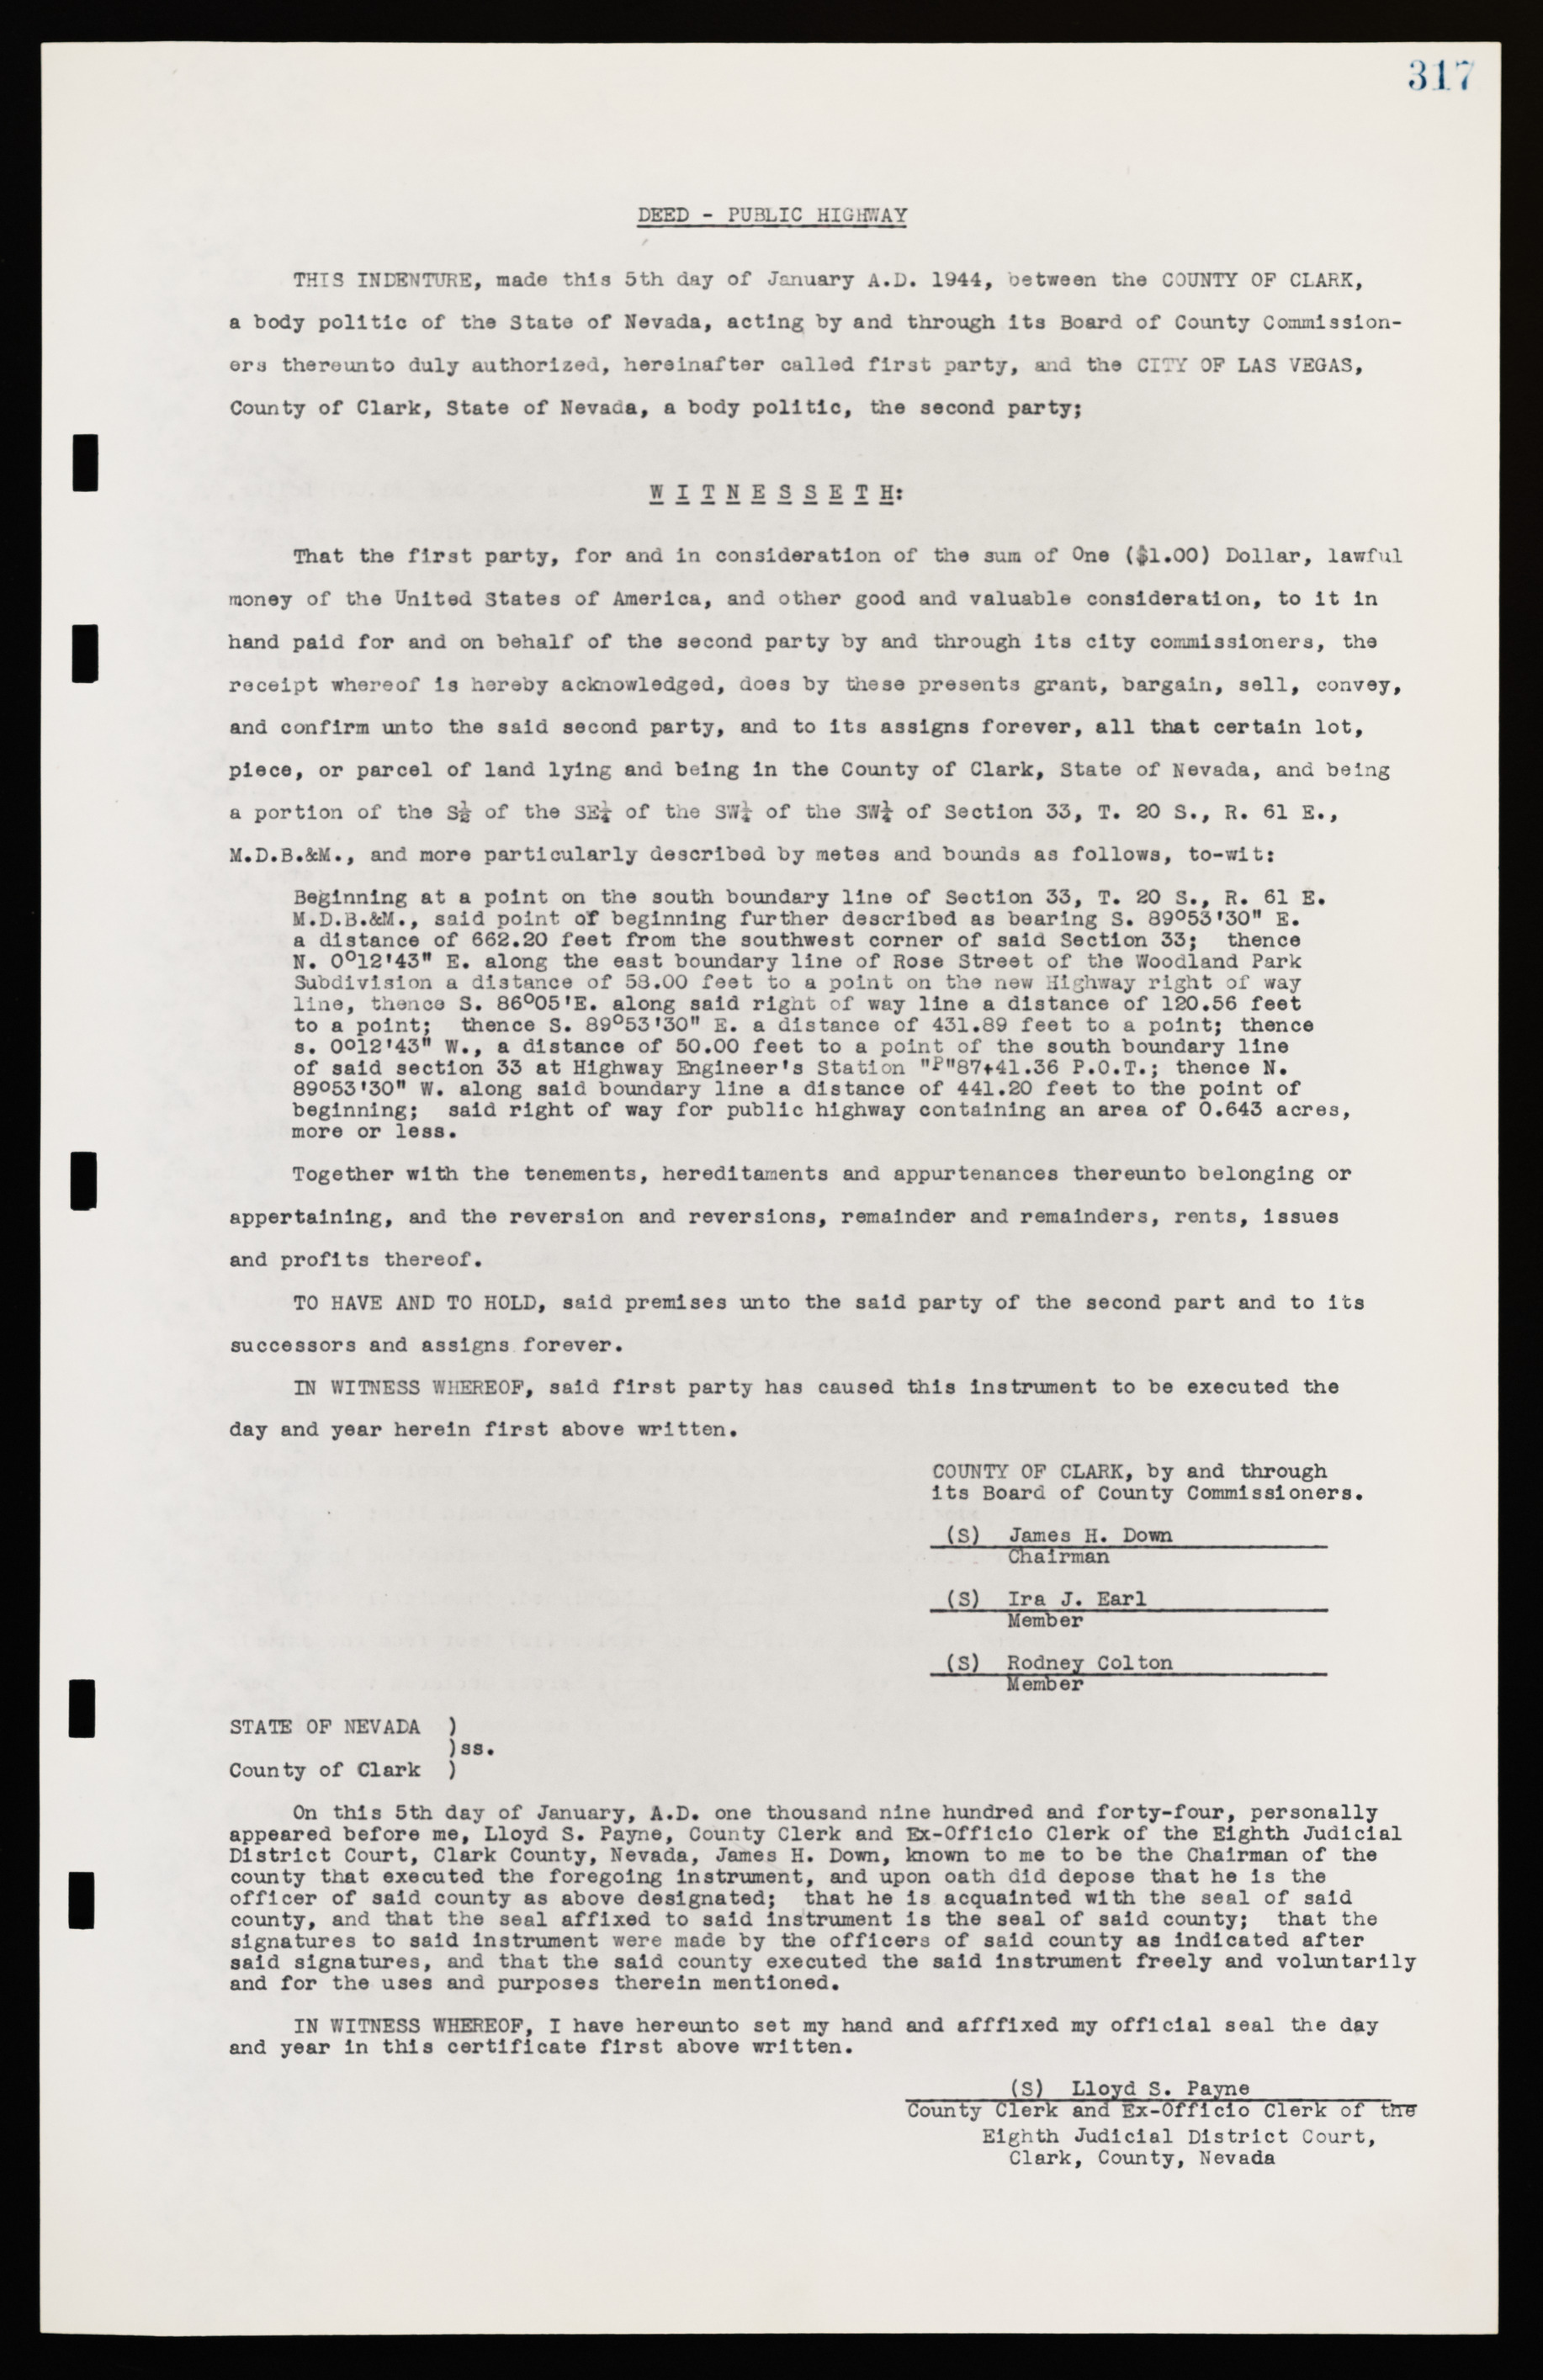 Las Vegas City Commission Legal Documents, February 29, 1944 to February 21, 1945, lvc000016-80